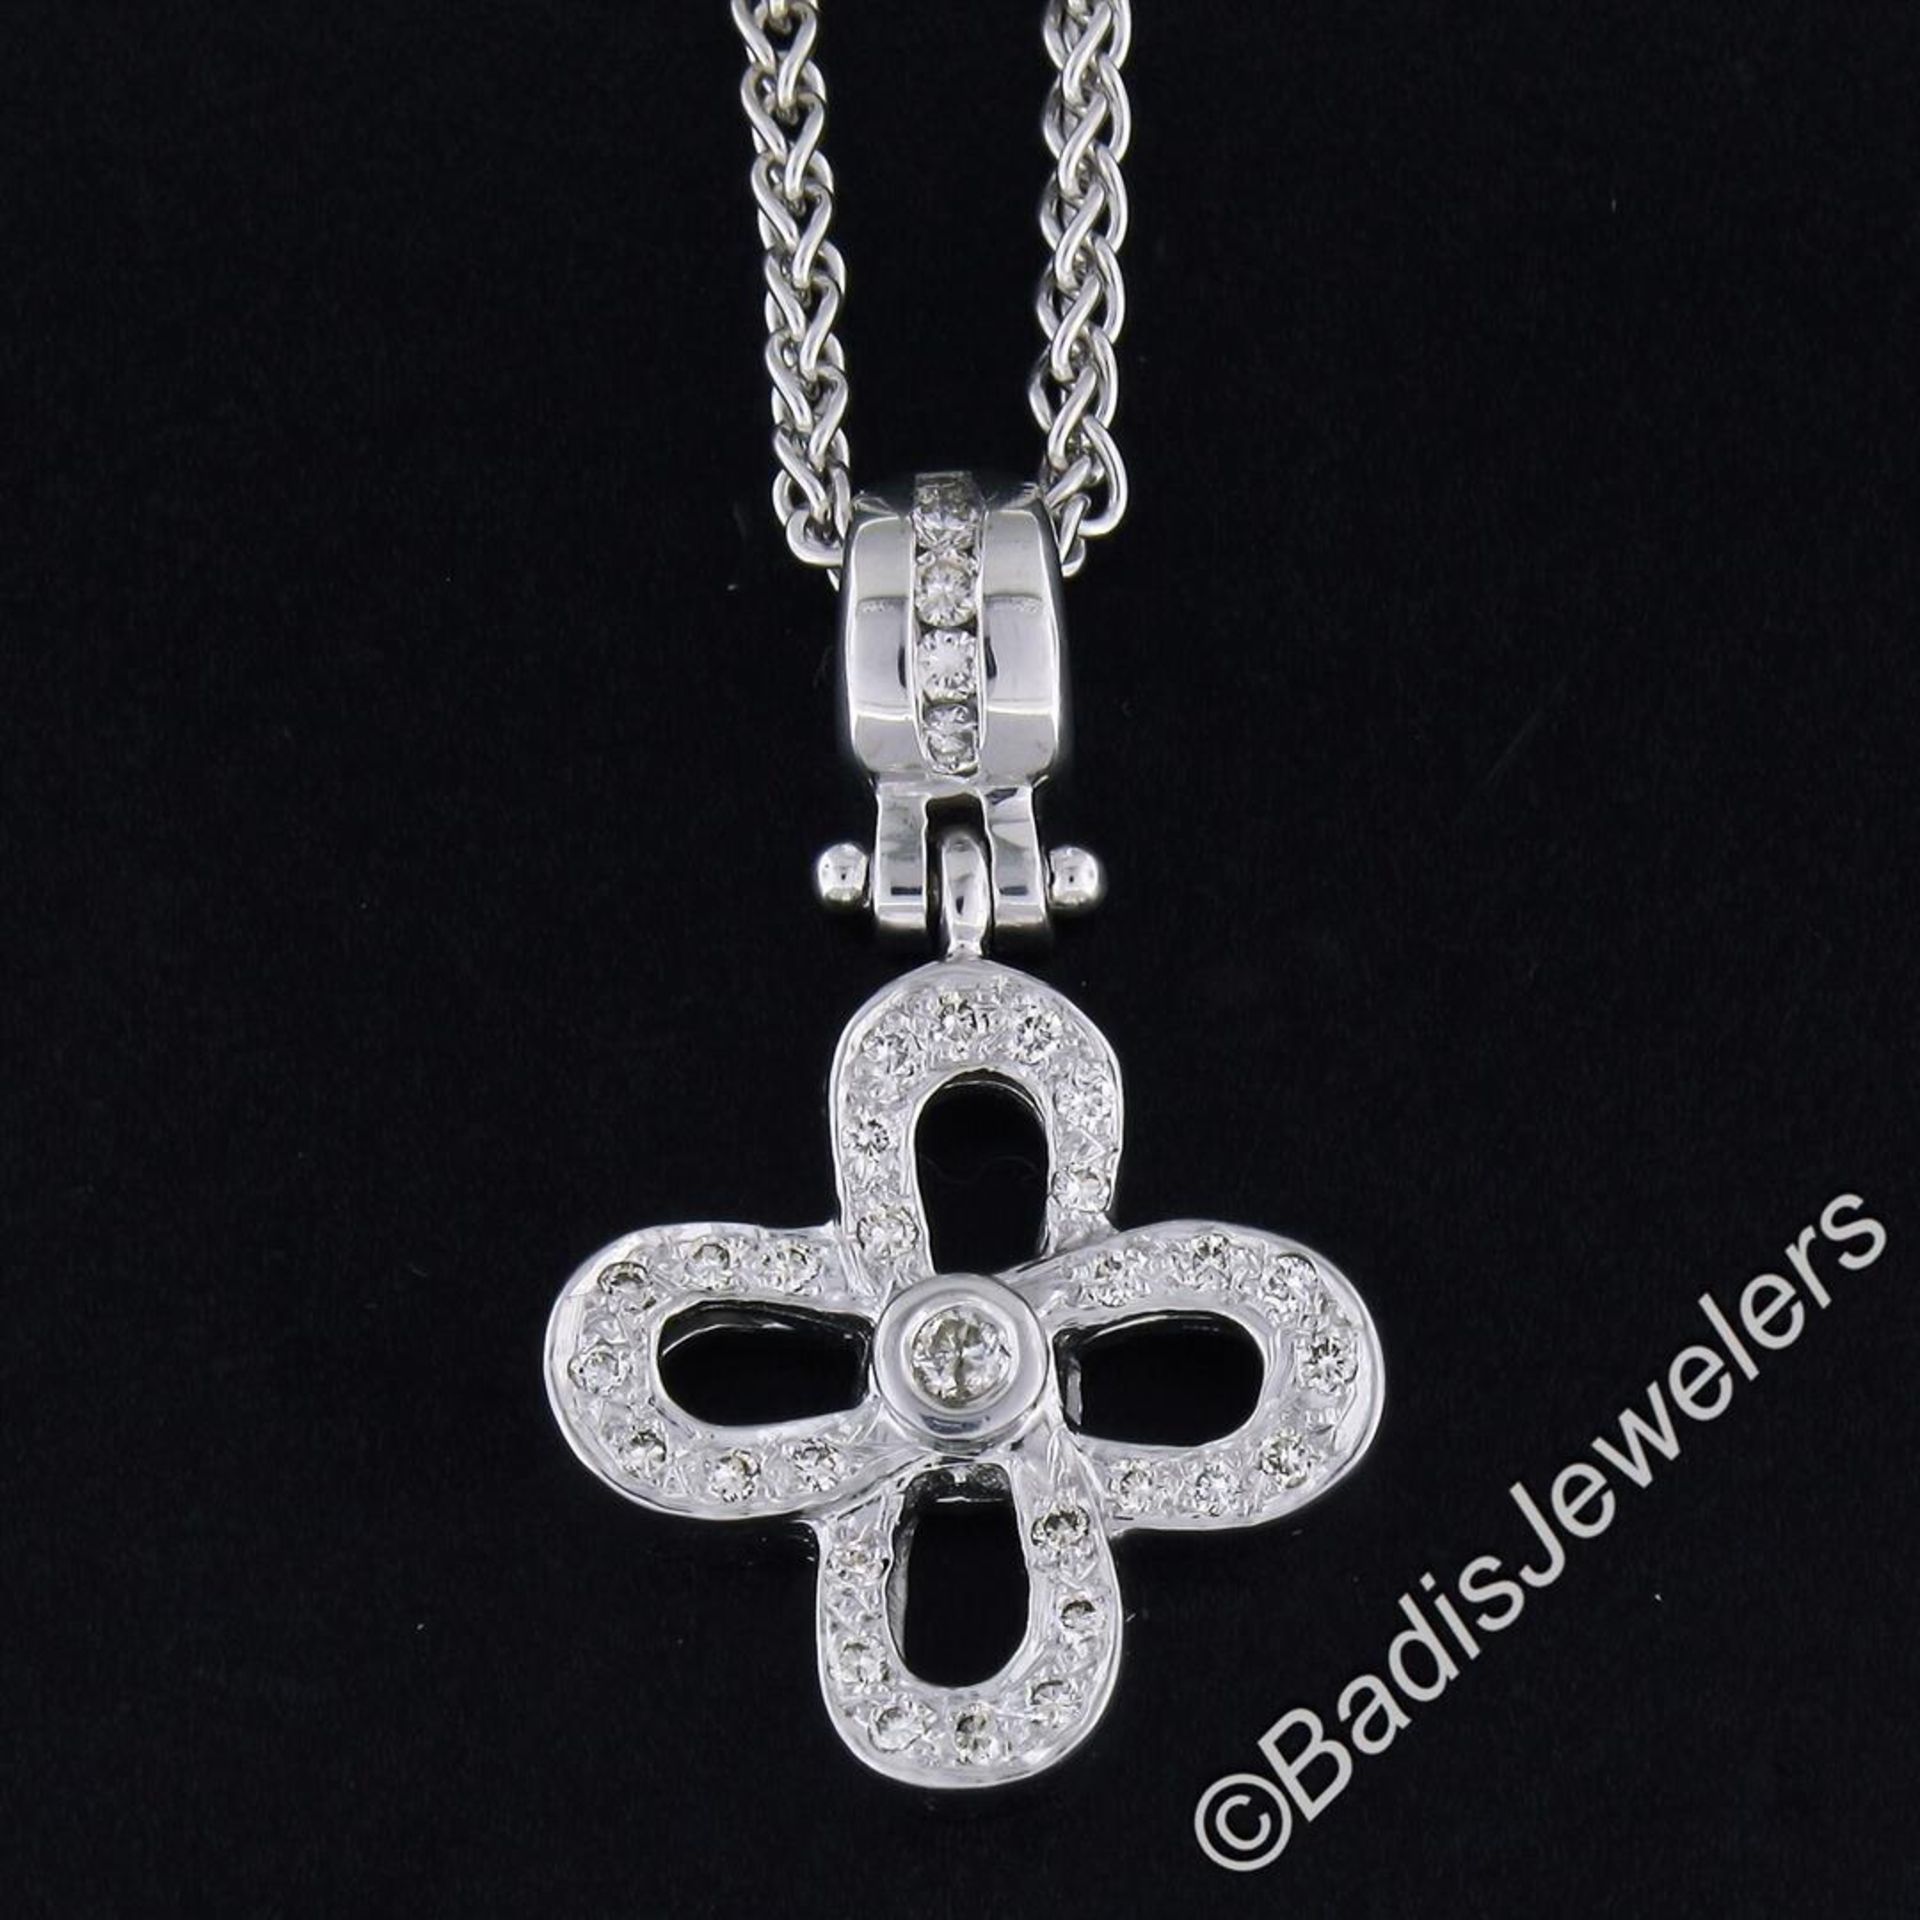 14kt White Gold 0.44ctw Diamond Open Flower Pendant Necklace - Image 8 of 8